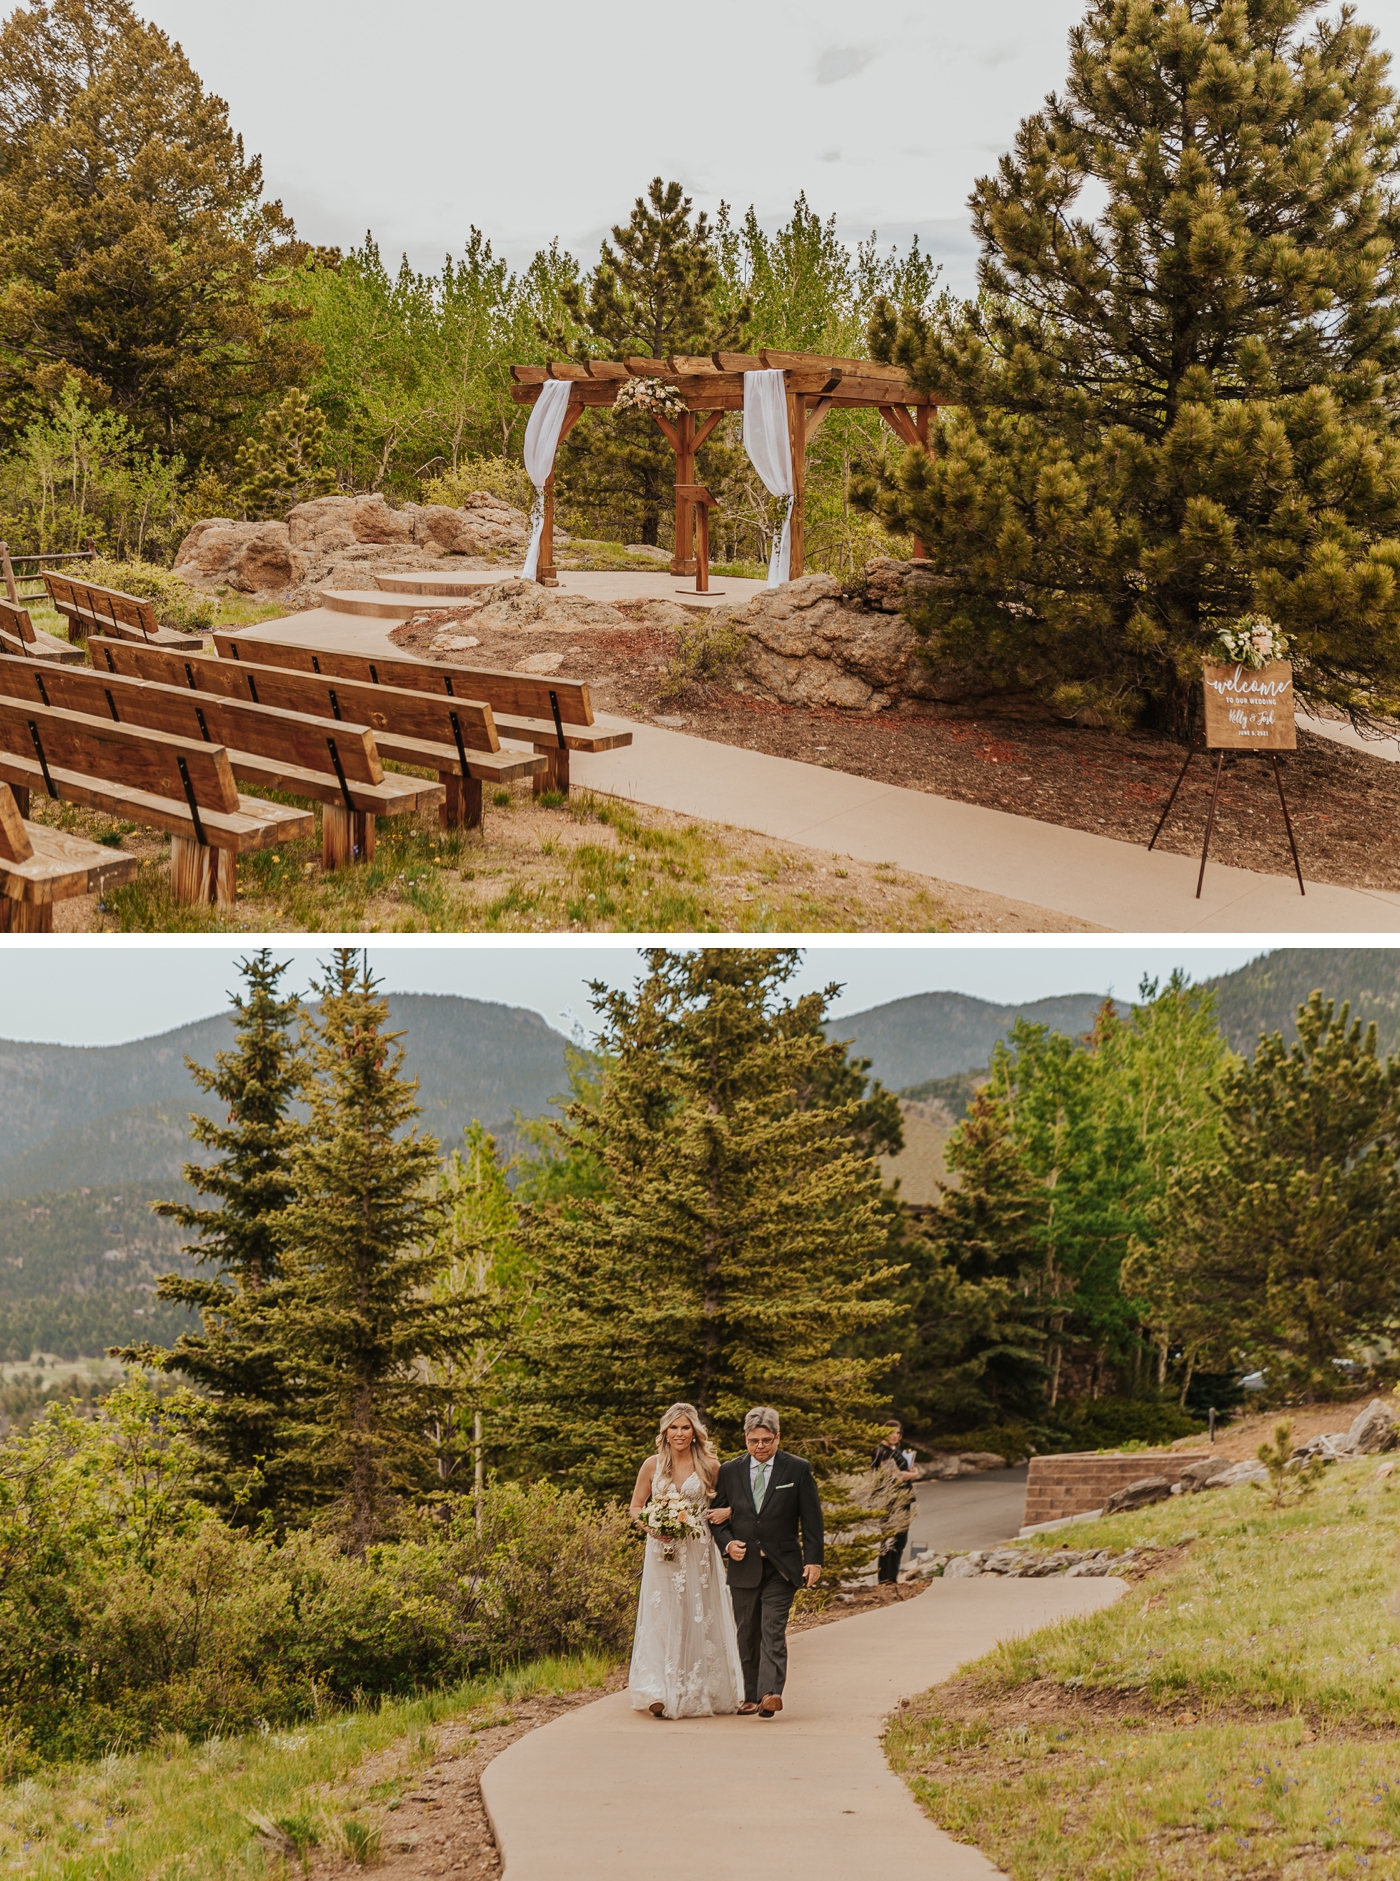 Outdoor wedding ceremony at Taharaa Mountain Lodge